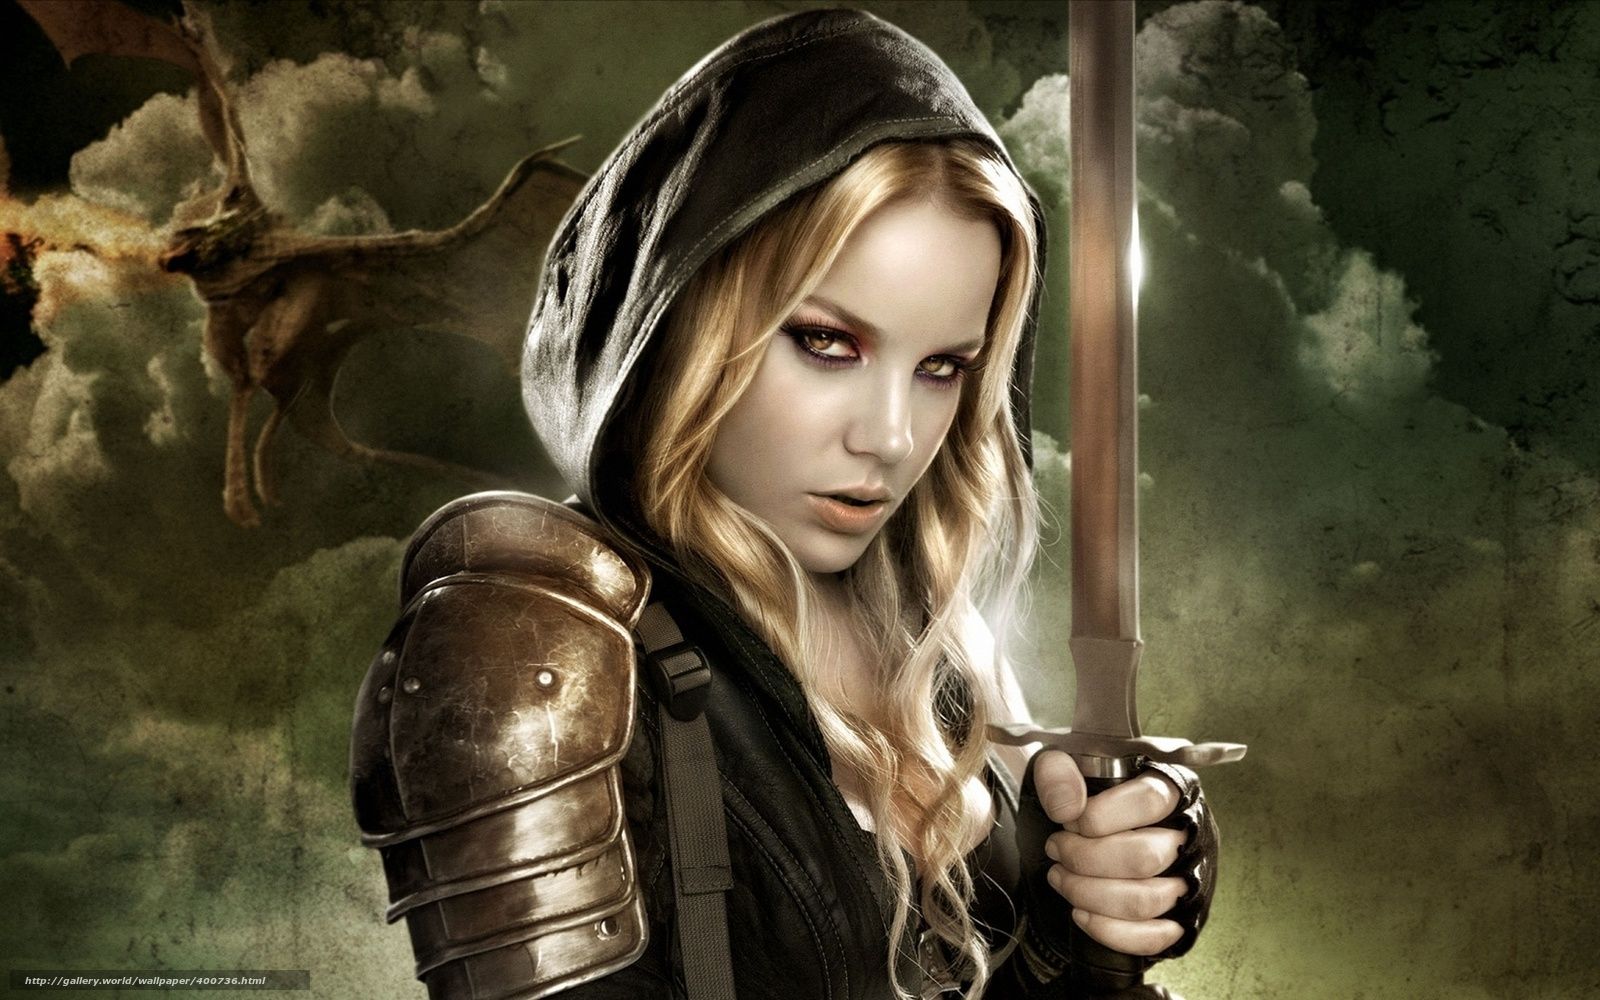 Free download wallpaper fantasy girl Warrior sword desktop